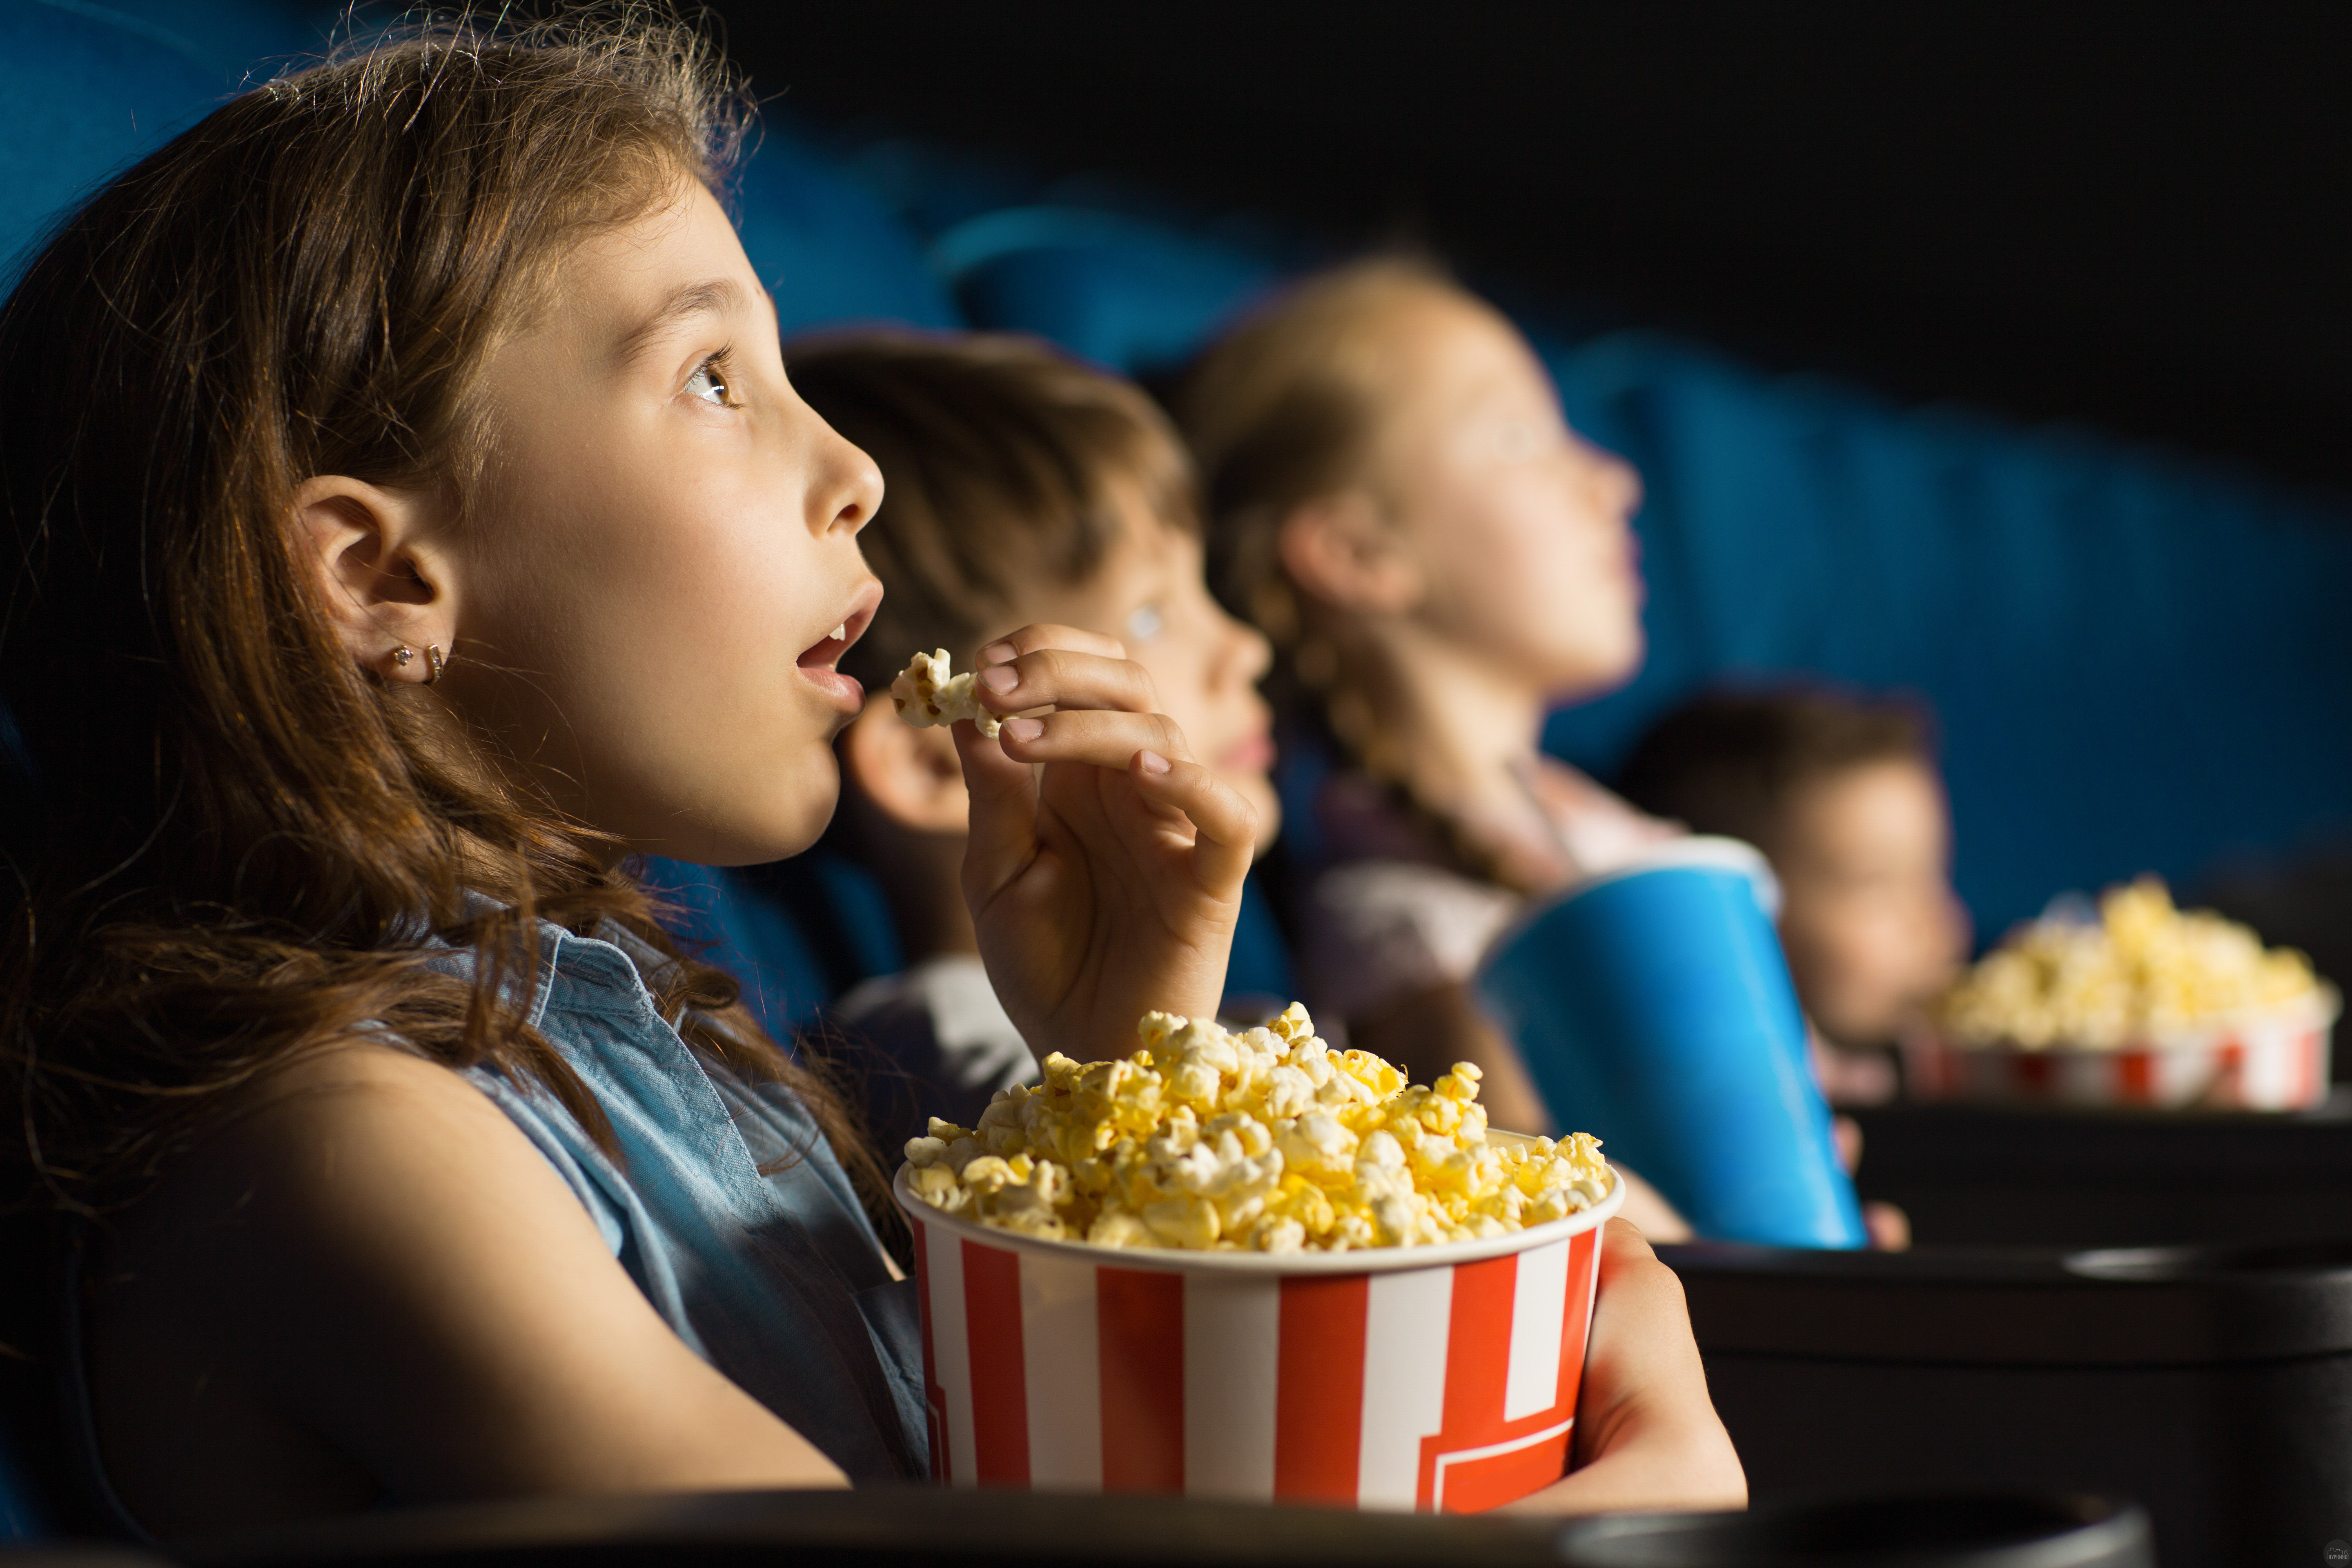 The cinema is than the library. Дети в кинотеатре. Есть попкорн в кинотеатре. Дети в кинотеатре с попкорном.